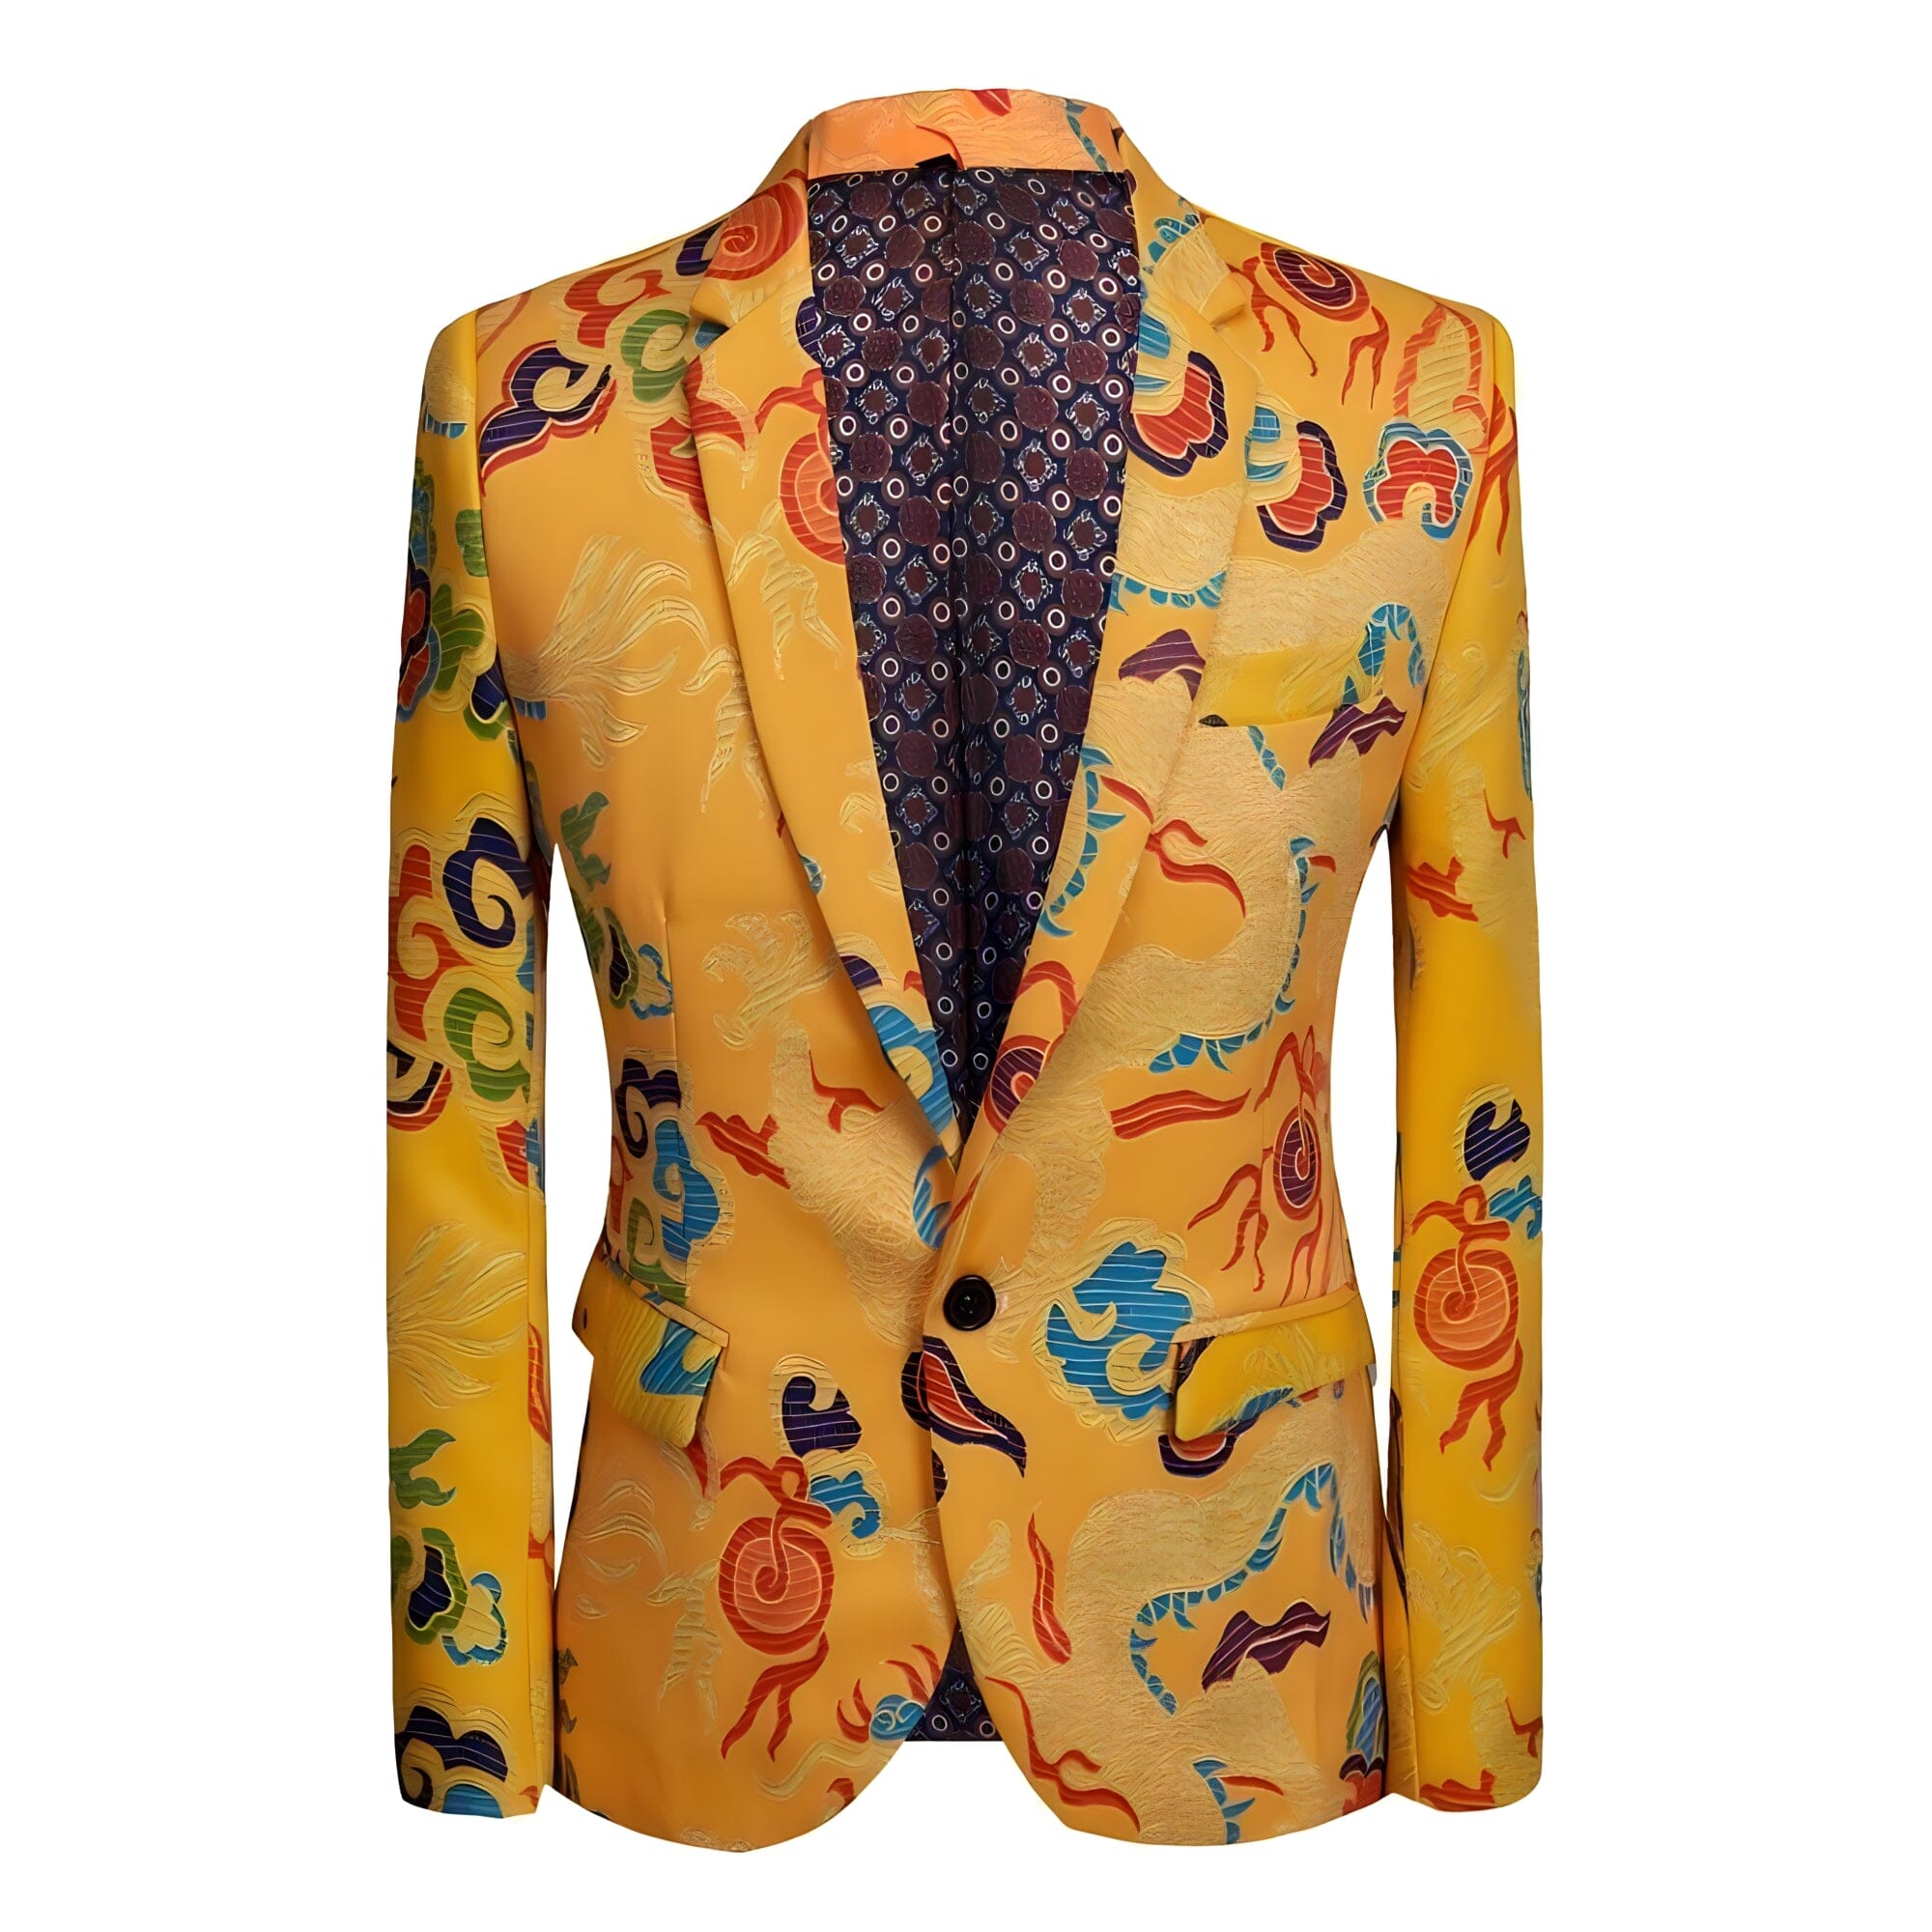 The Komodo Slim Fit Blazer Suit Jacket Shop5798684 Store XS 36R 